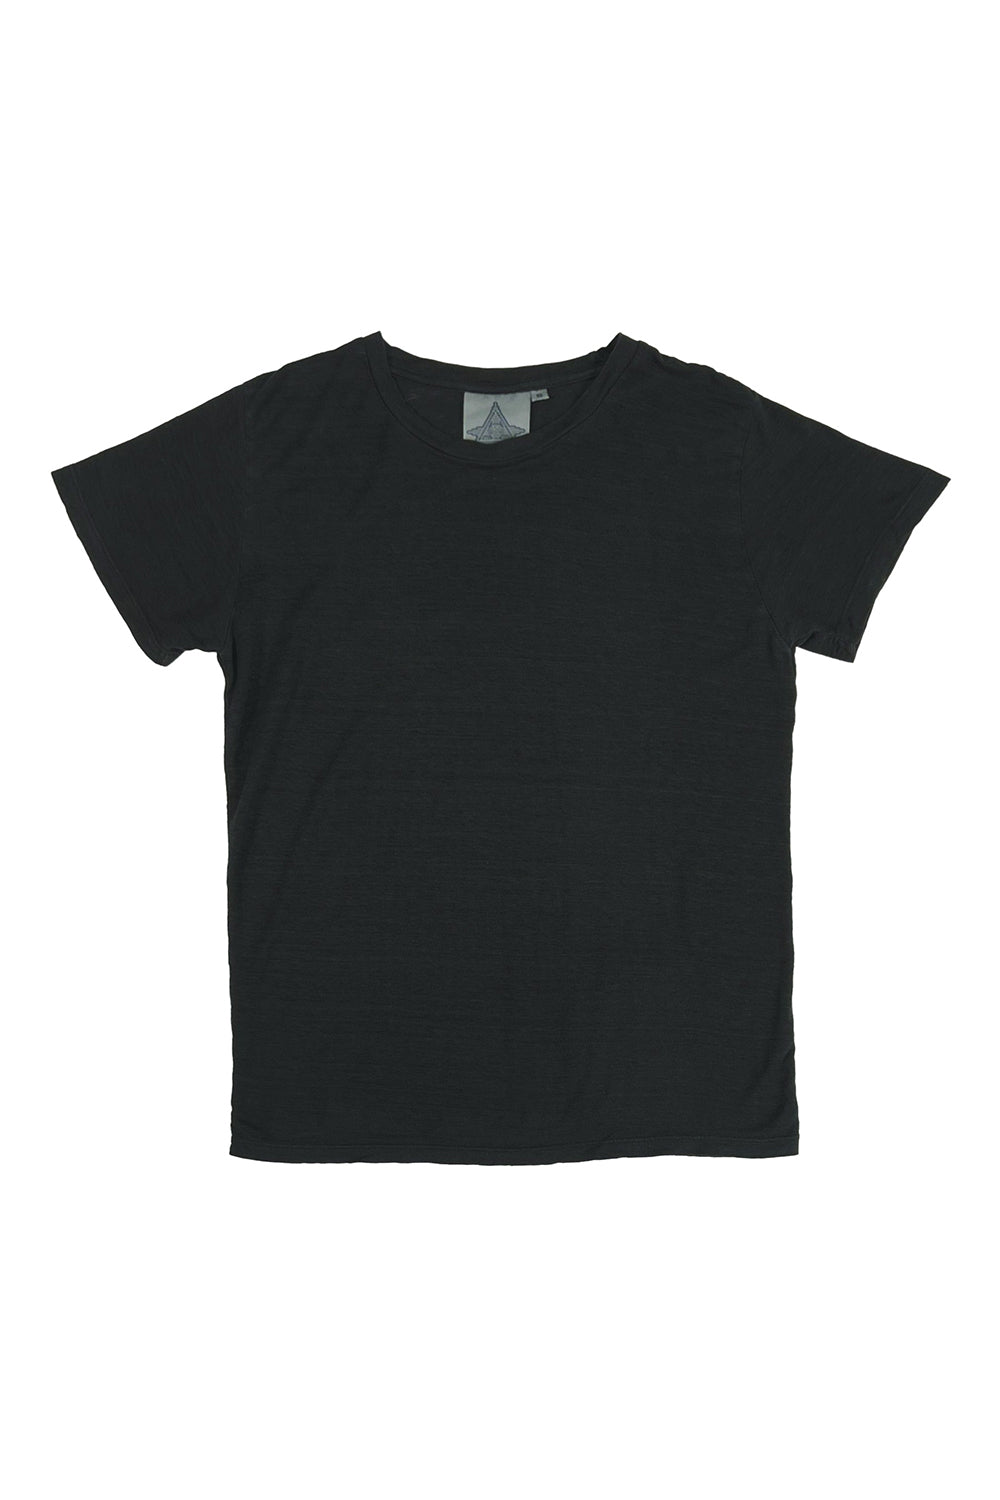 Madison 100% Hemp Tee | Jungmaven Hemp Clothing & Accessories / Color: Black